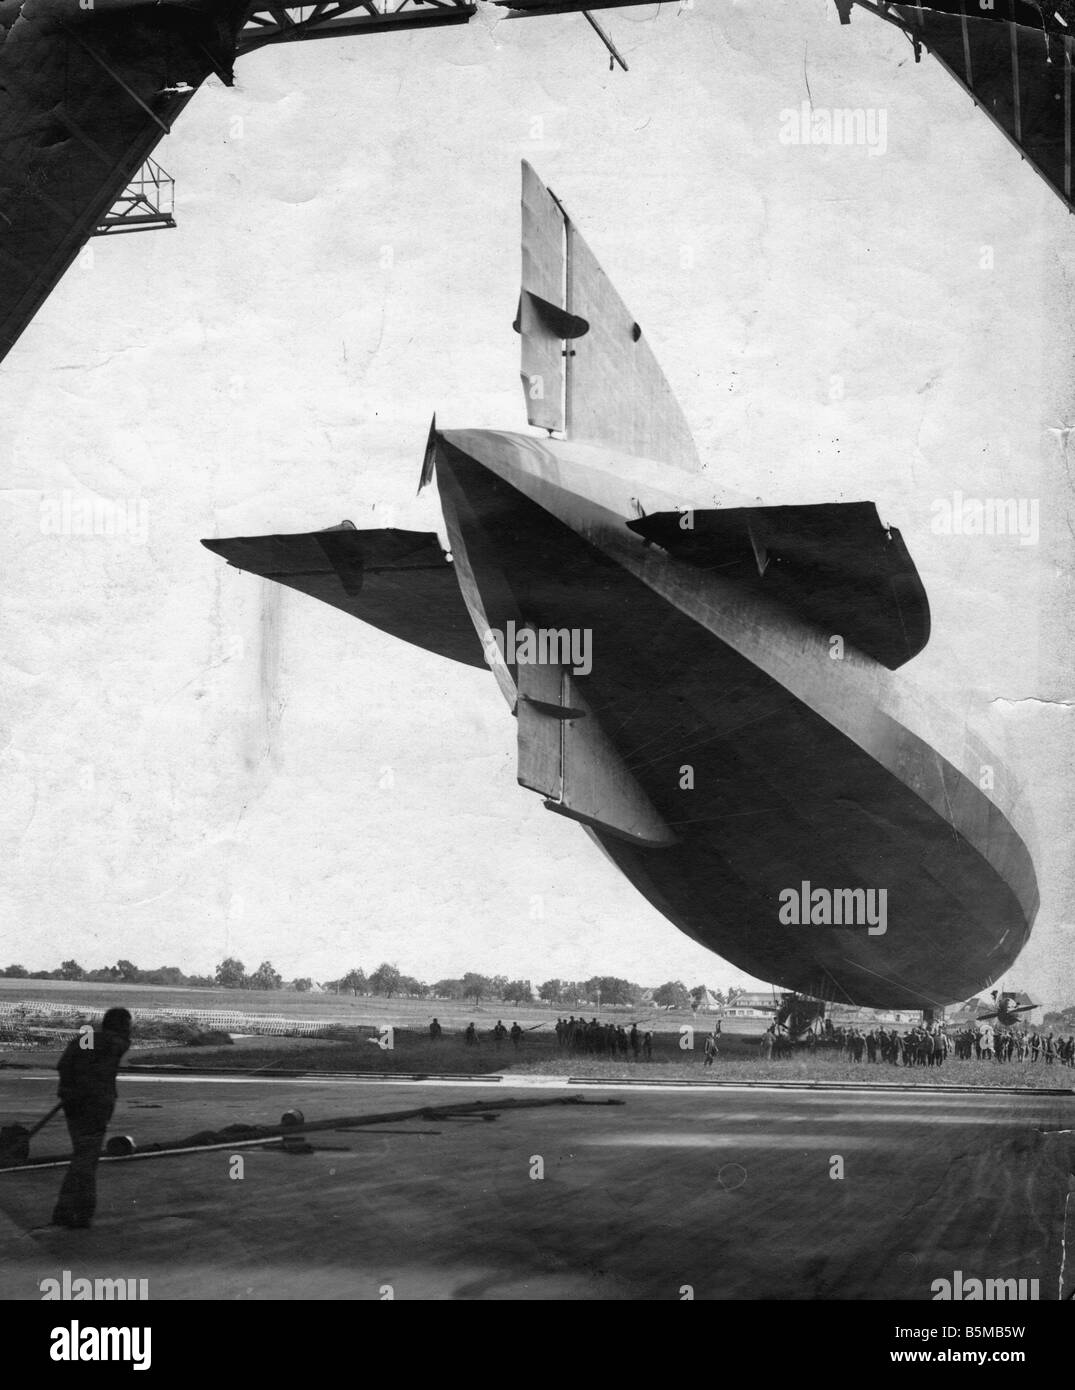 Navy Airship L 53 Photo 1917 Transport Aviation Airships Navy airship L 53 brought into the hangar tail first Photo 1917 Stock Photo